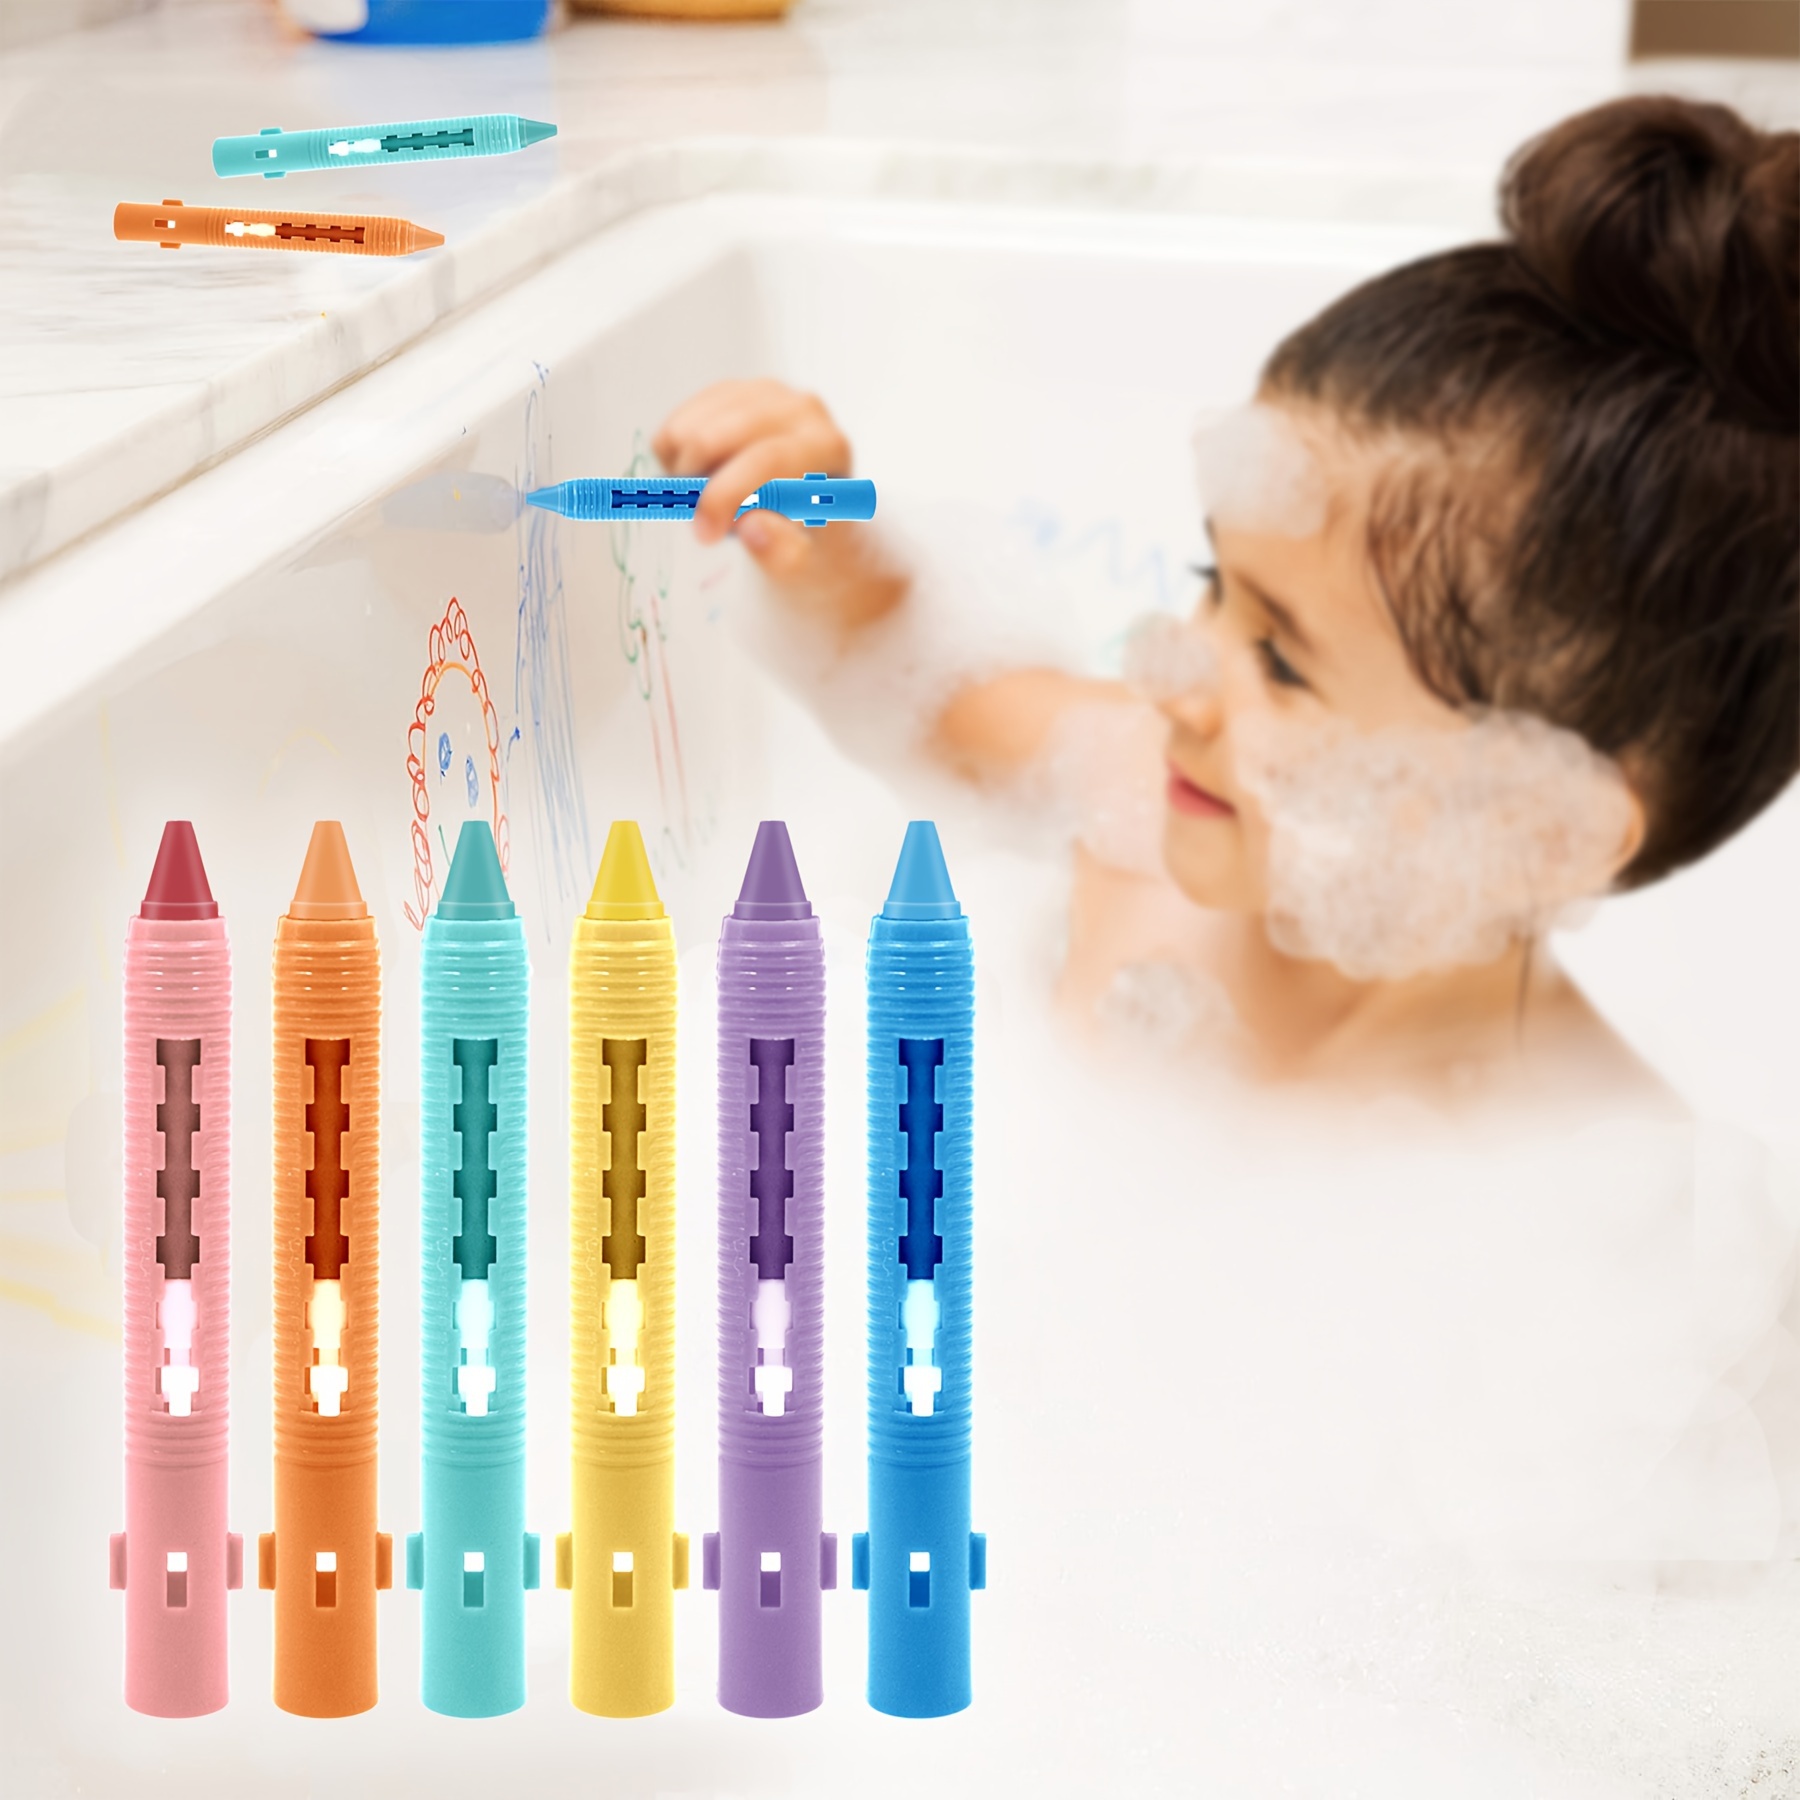 6Pcs/Set Kids Drawing Toys Bath Toy Baby Bath Crayons Toddler